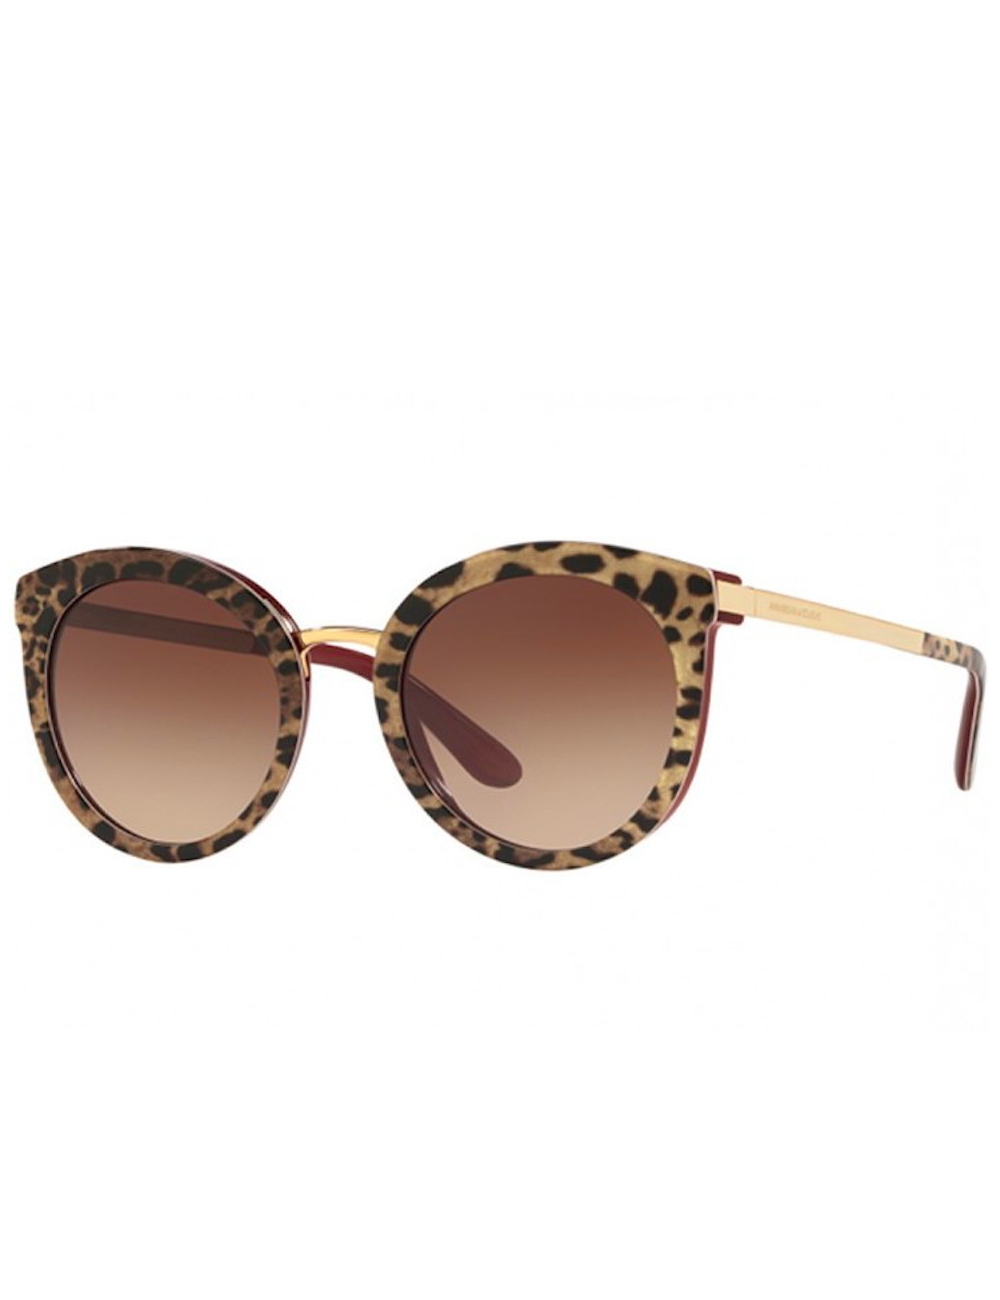 Dolce & Gabbana DG4268 315513 women round sunglasses – 